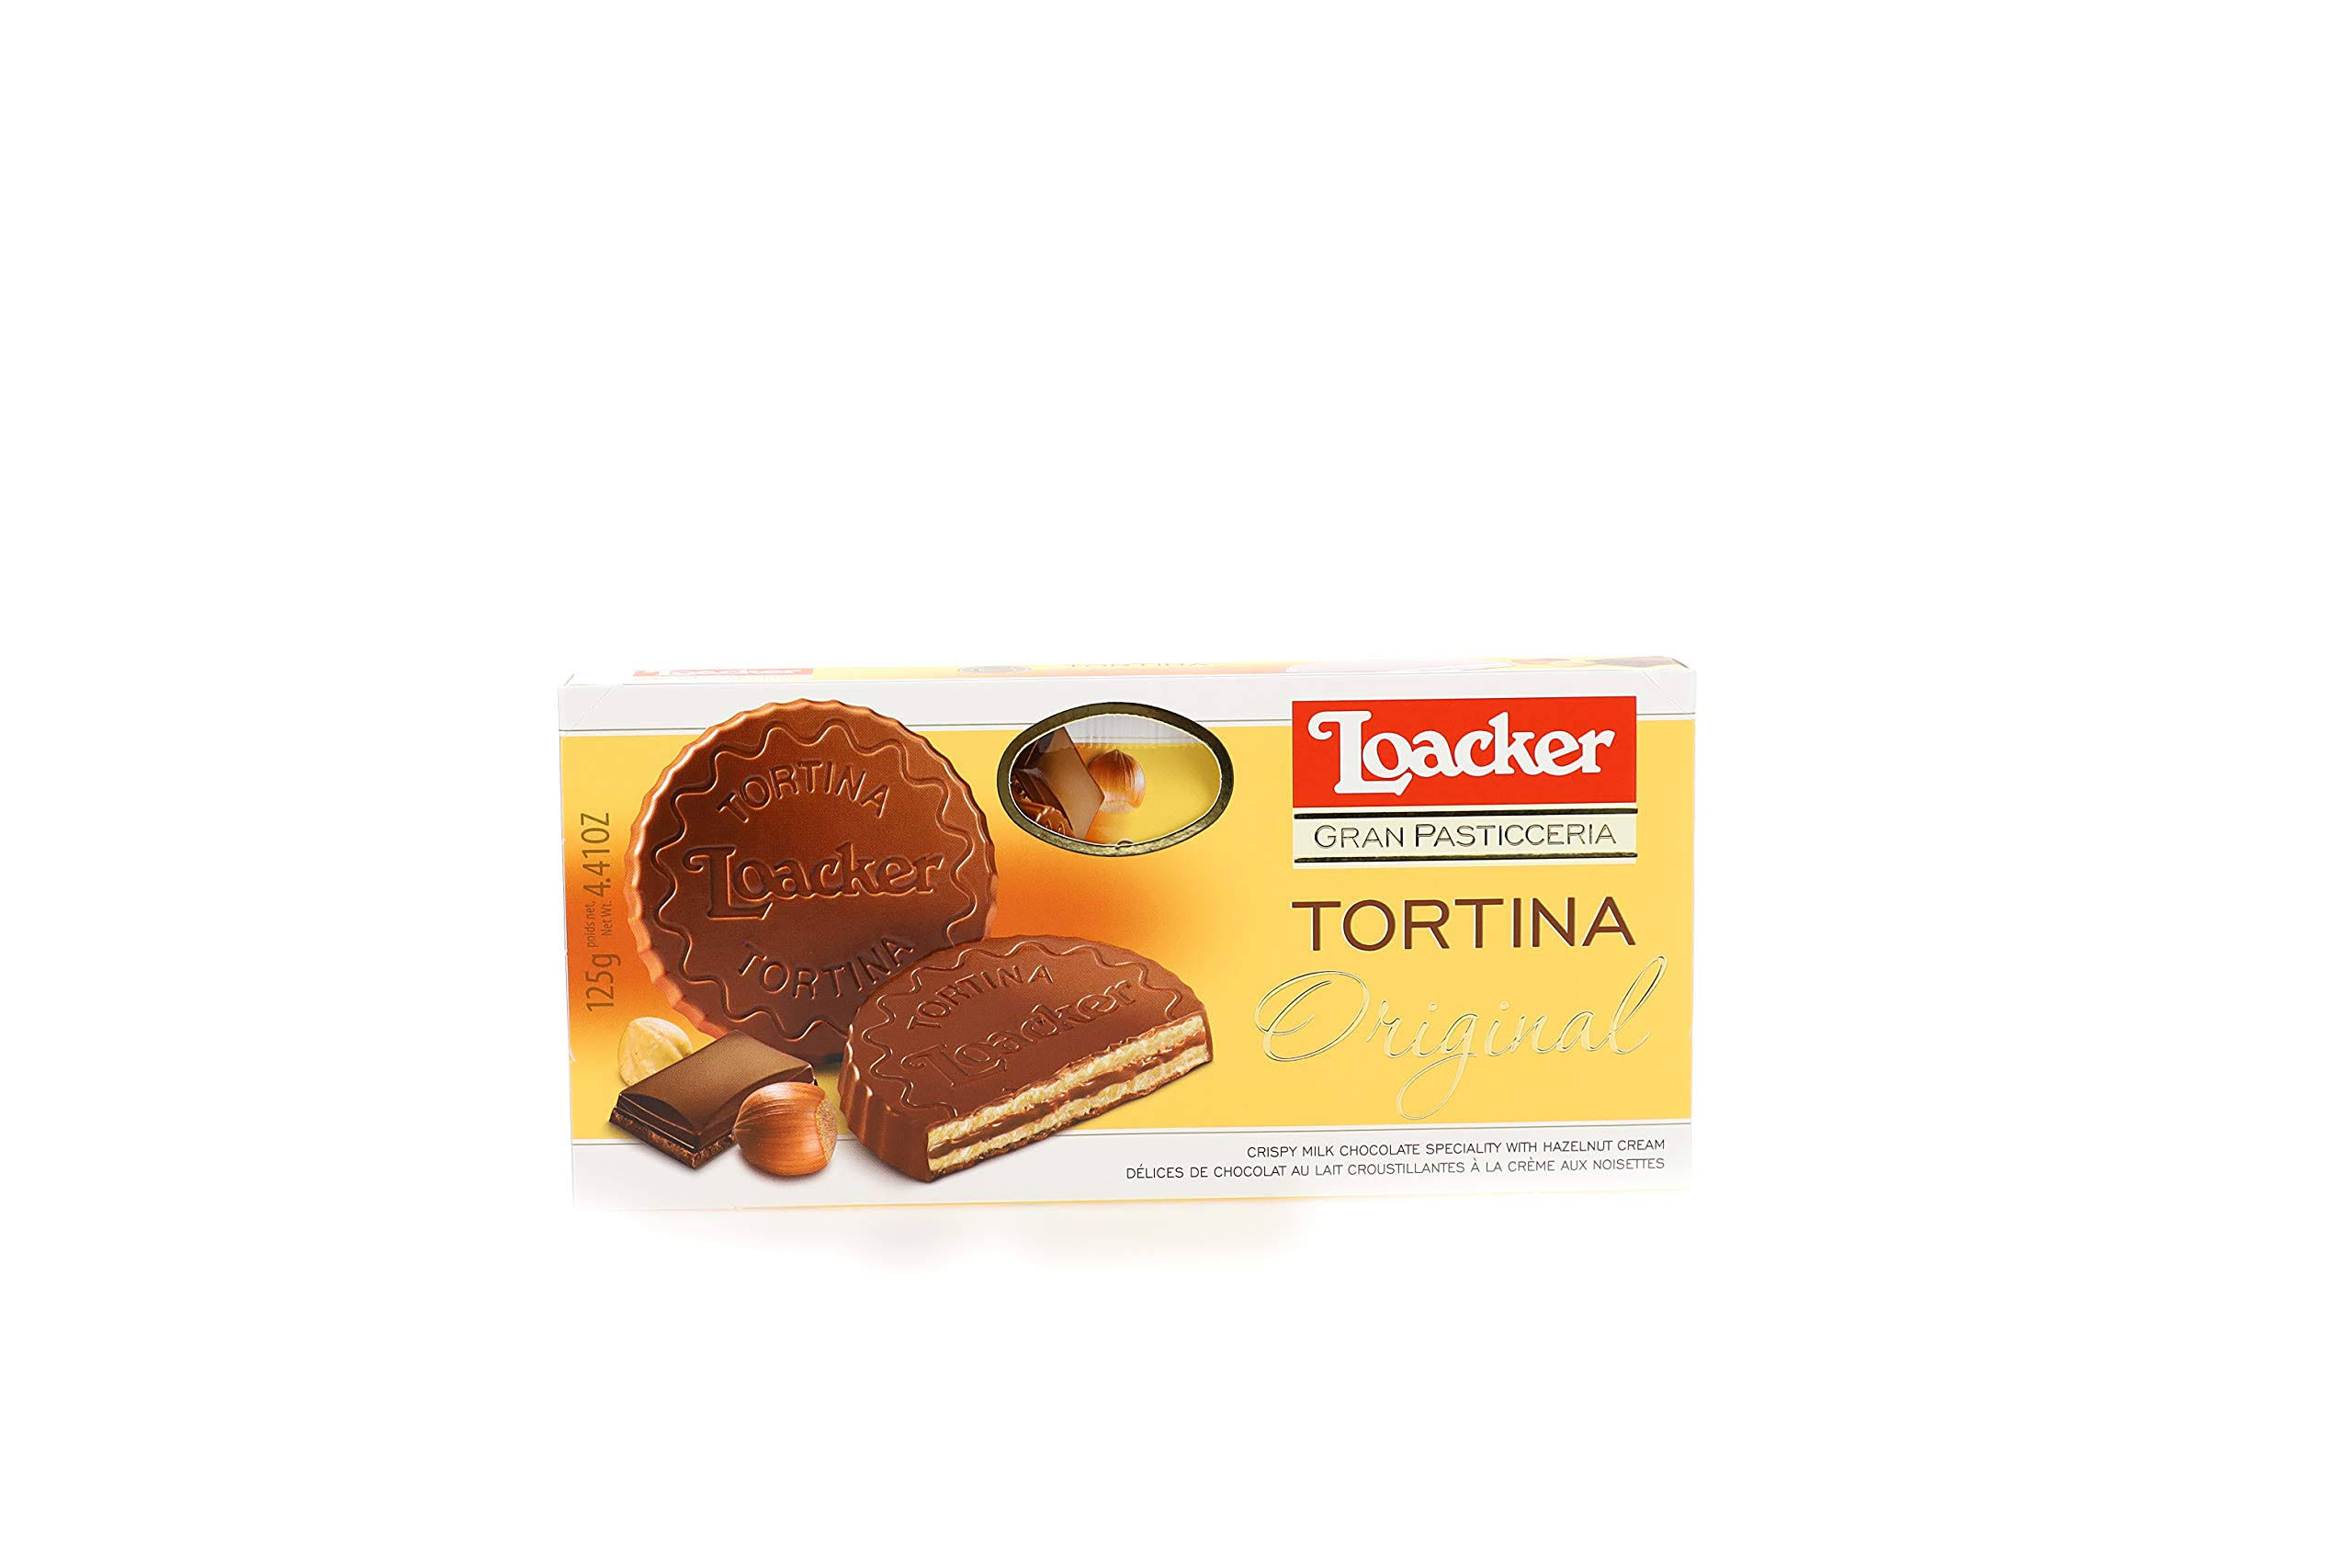 Loacker Tortina, Premium Chocolate Coated Wafer, Original - 4.41 oz